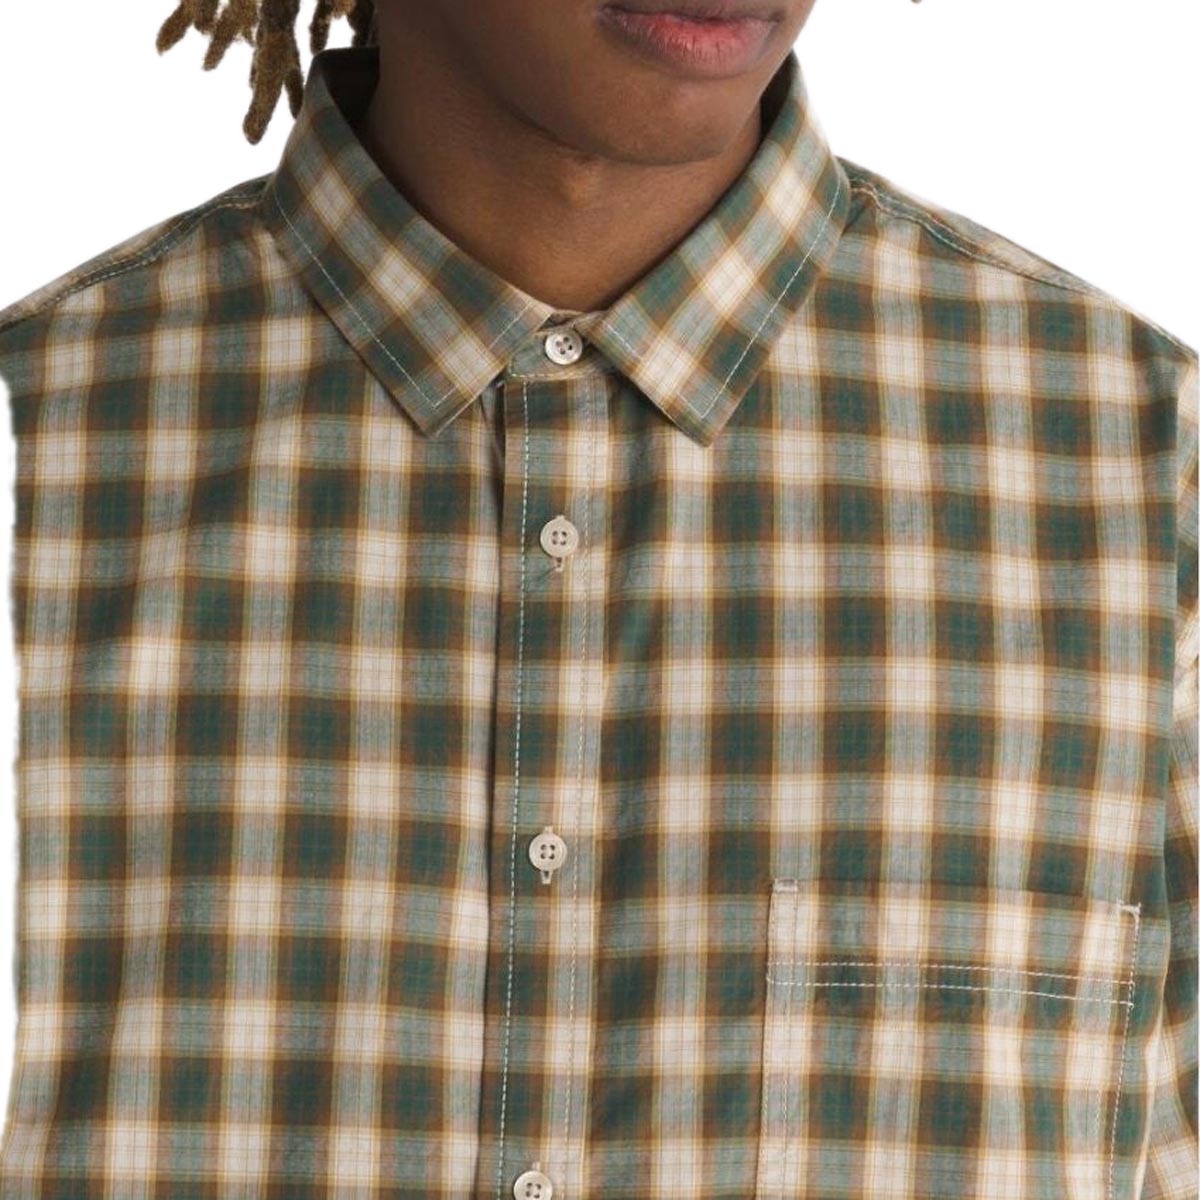 Vans Hadley Woven Shirt - Oatmeal/bistro Green image 3